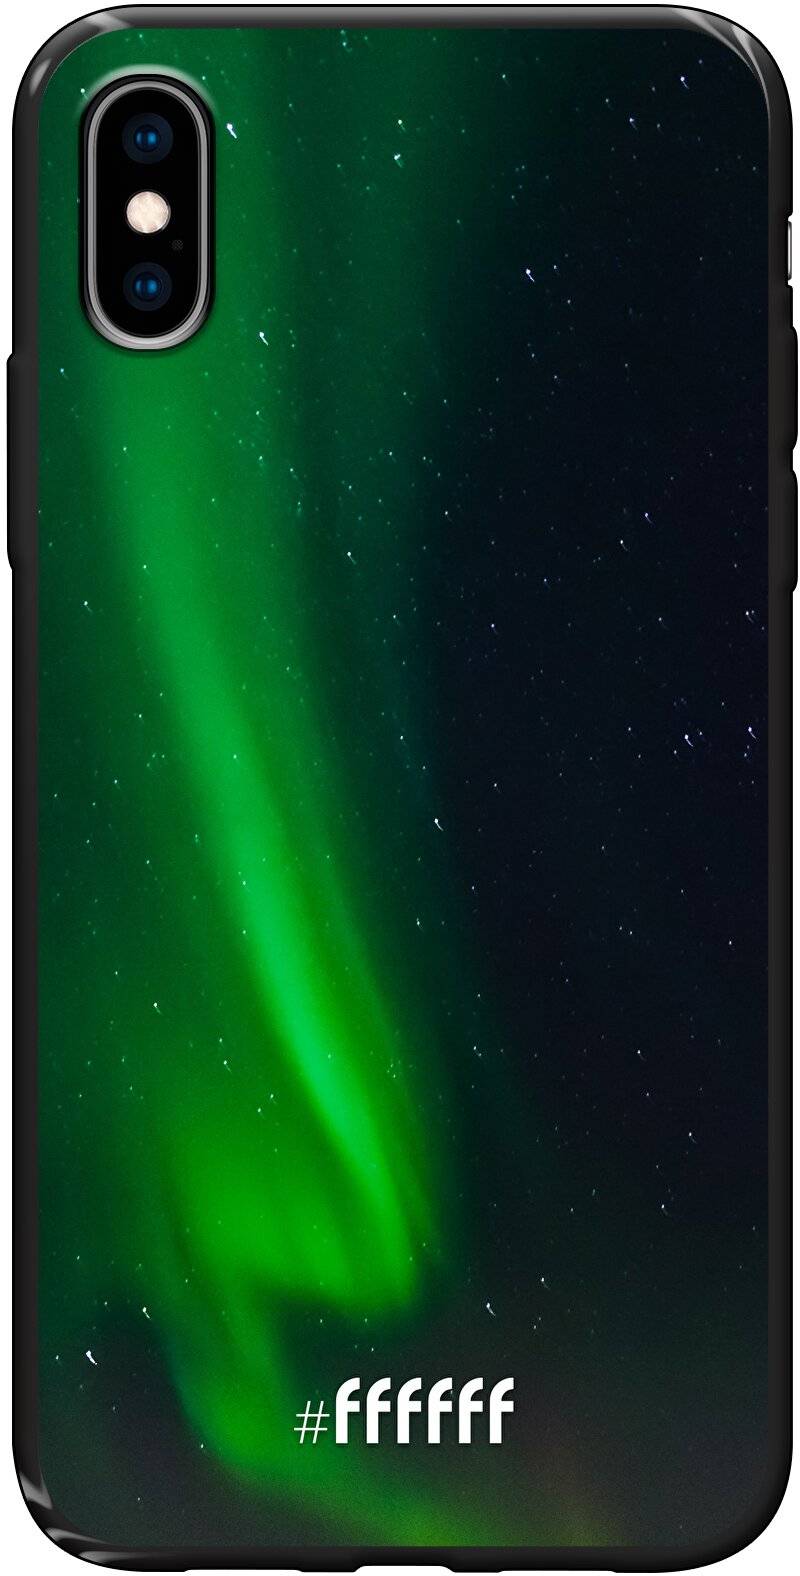 Northern Lights iPhone X